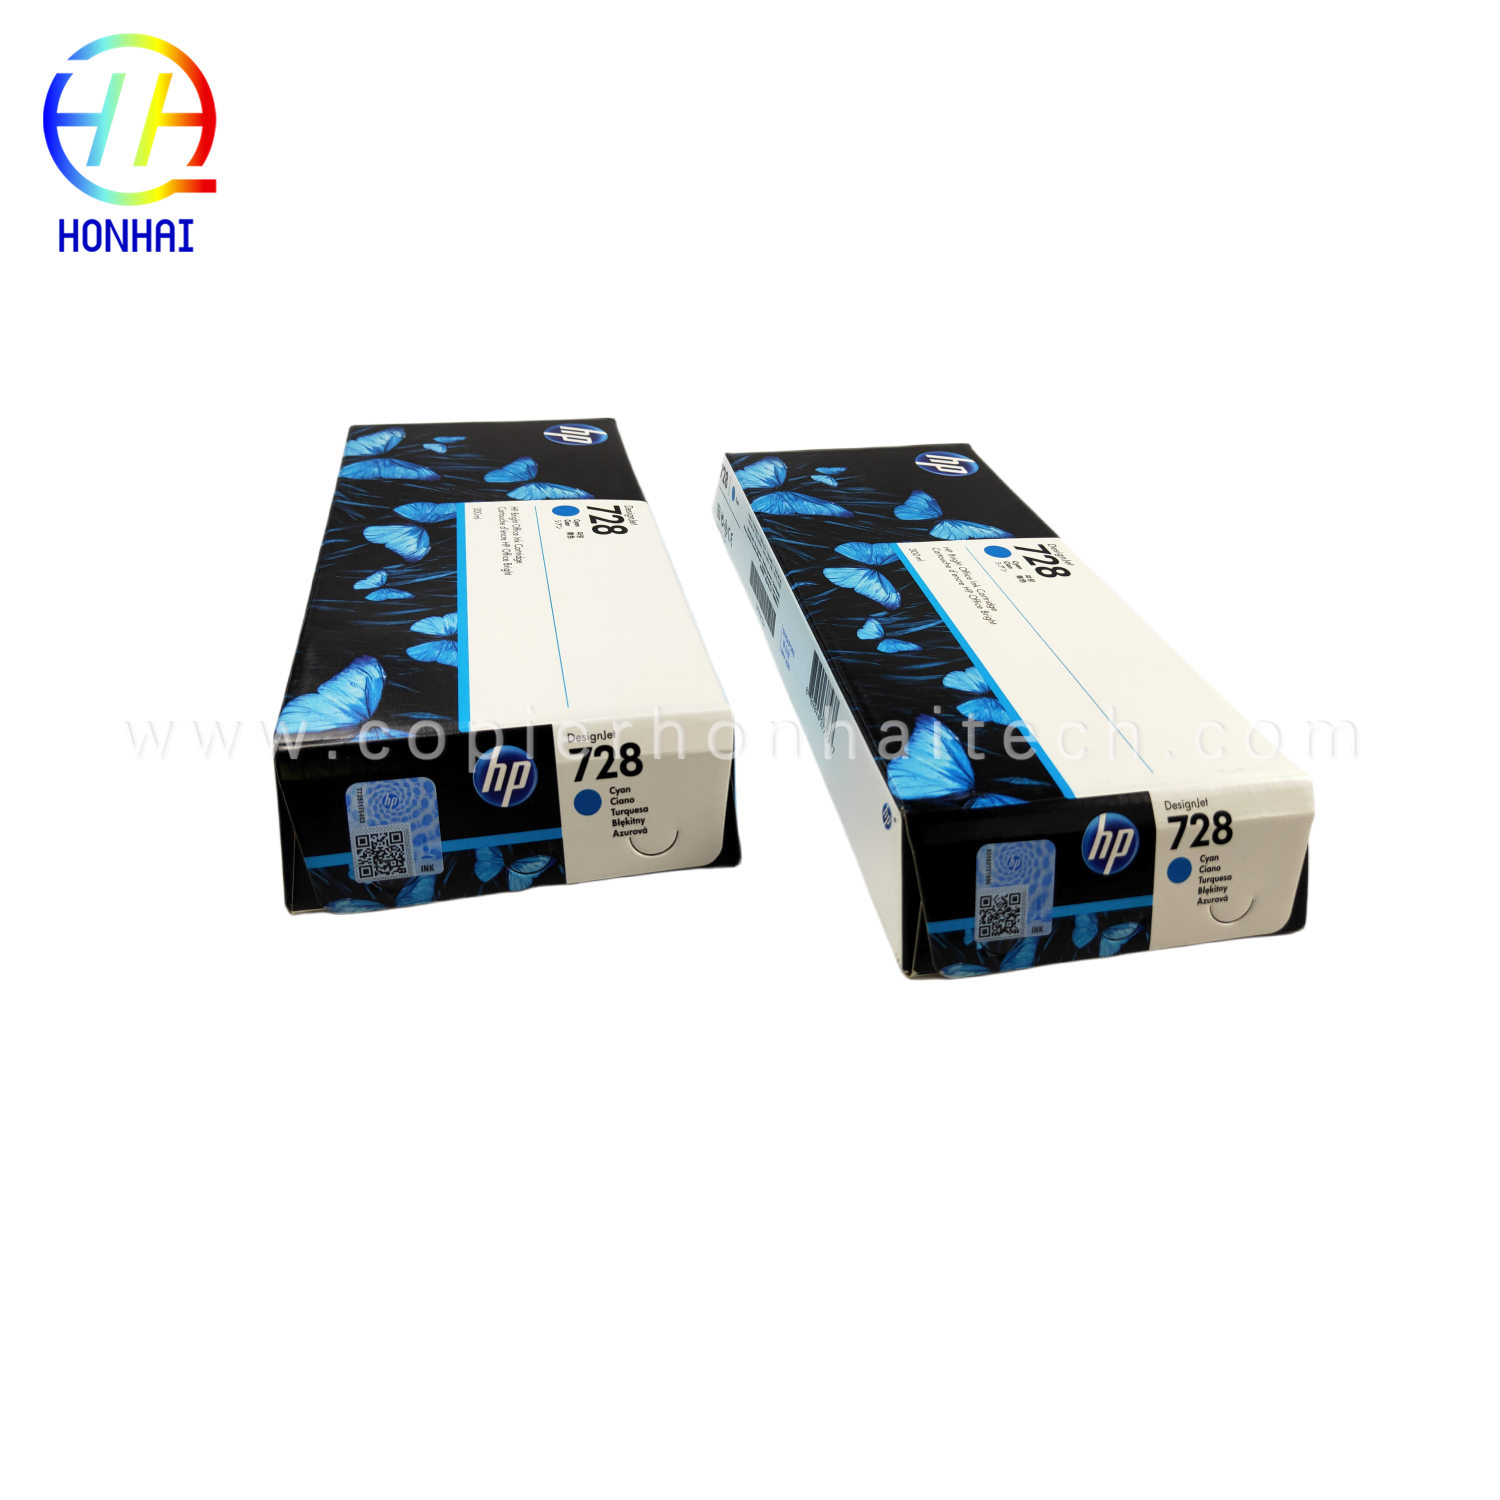 https://www.copierhonhaitech.com/original-new-ink-cartridge-cyan-for-hp-designjet-t730-and-t830-large-format-plotter-printers-and-hp-729-designjet-printhead- 728-f9k17a-produto/